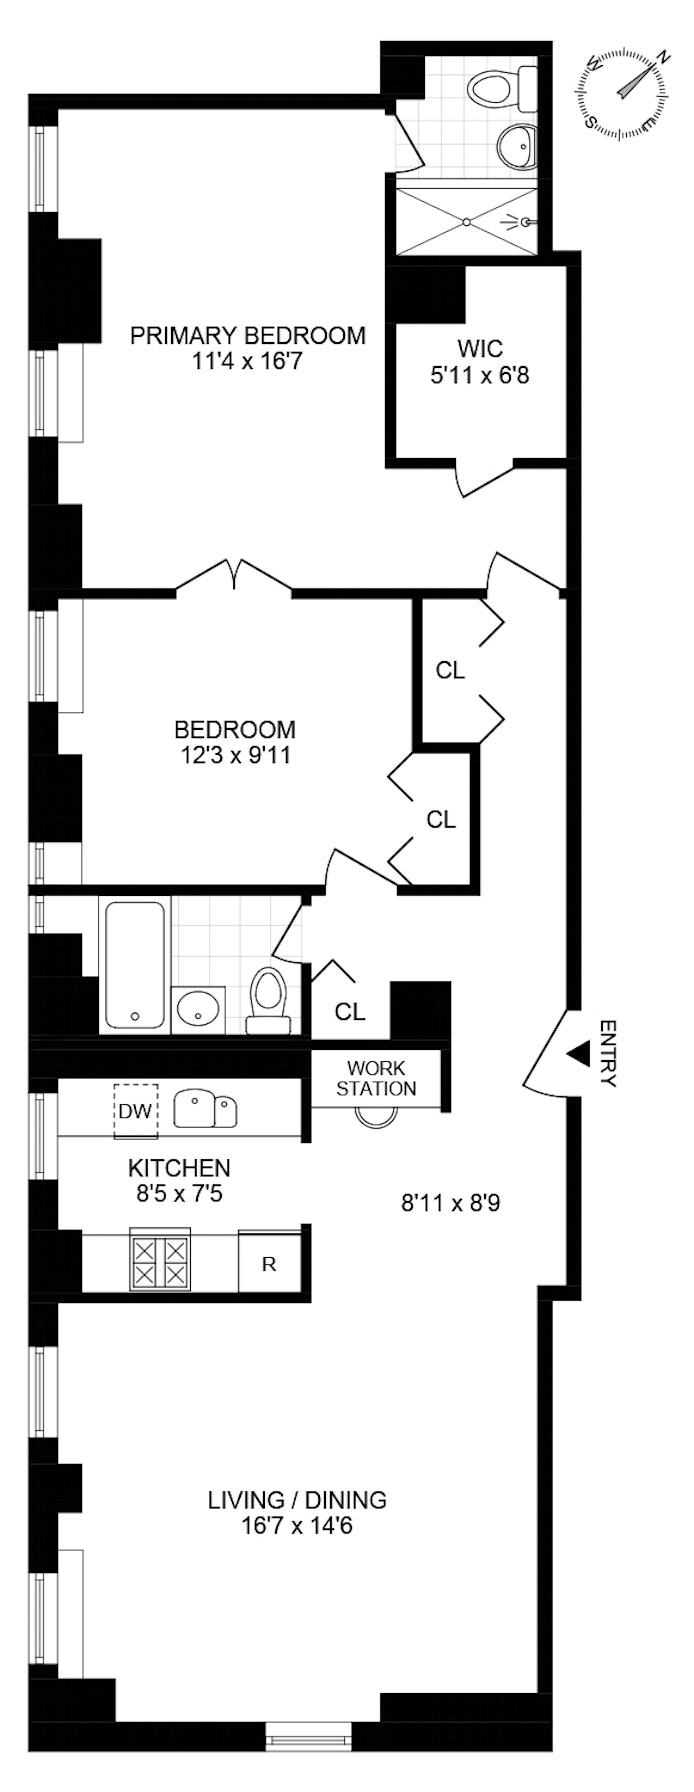 Floorplan for 111 Hicks Street, 19J